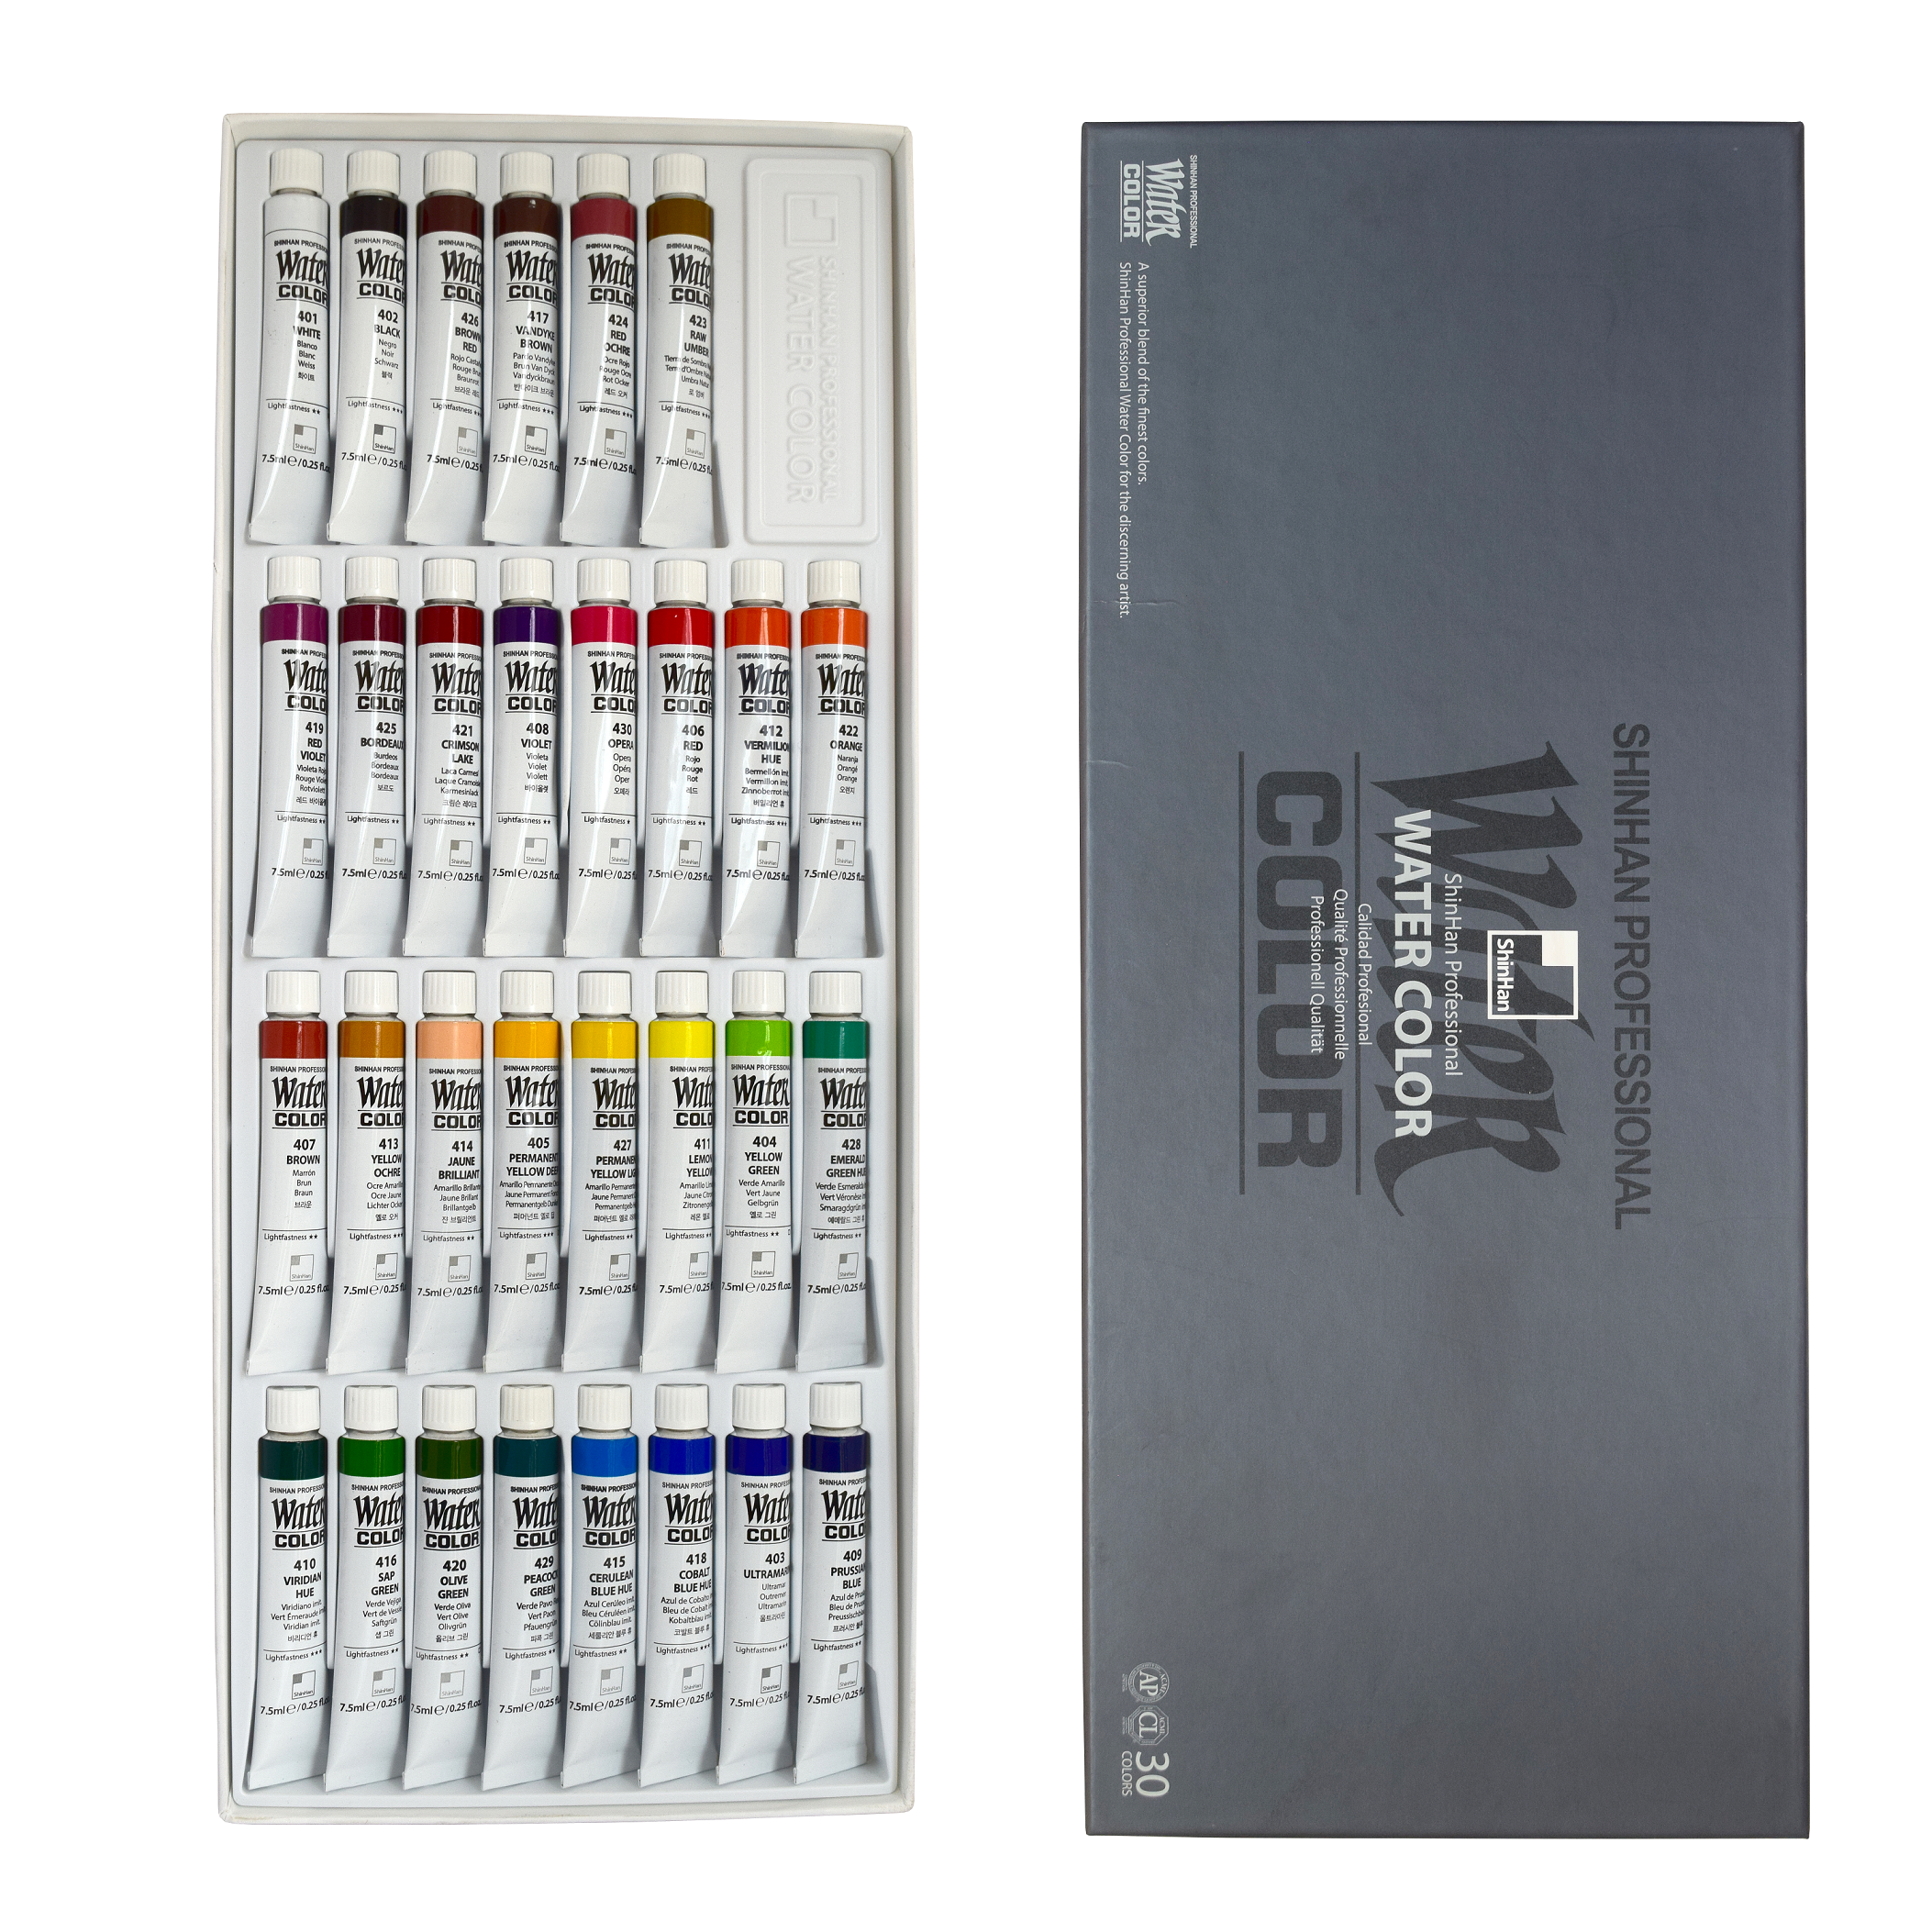 Shinhan Professional Watercolor Paint 7.5ml Tubes 13 Color Set